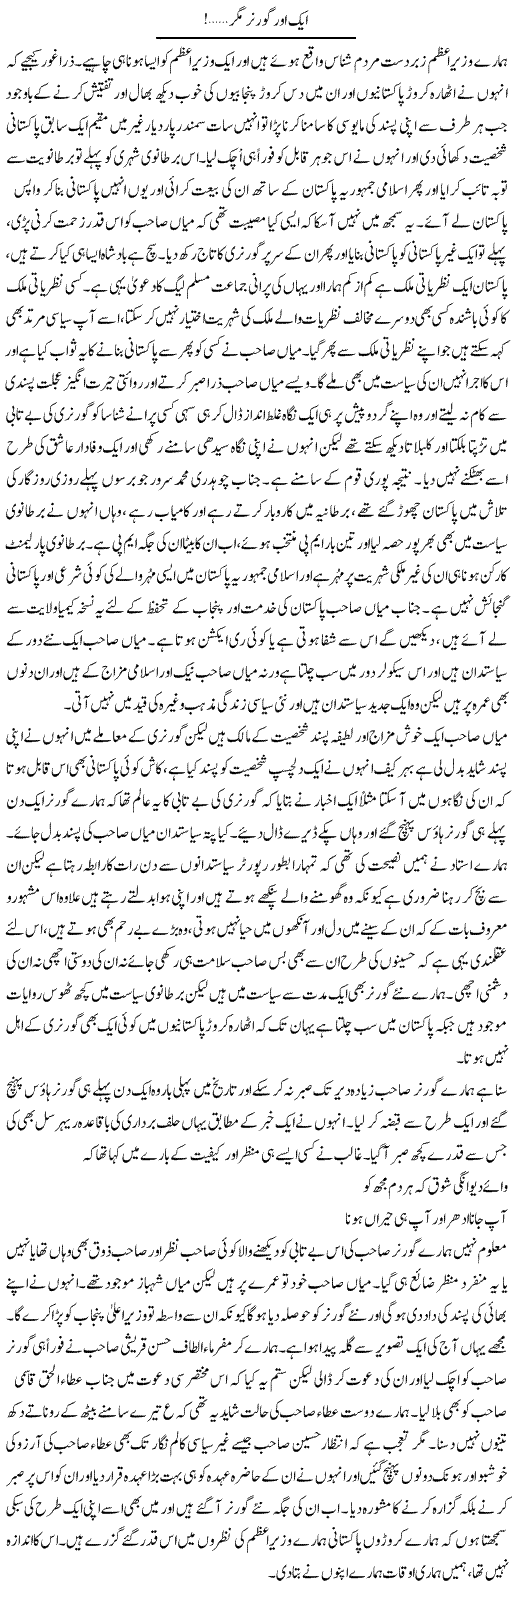 Ek Or Gawerner Magar | Abdul Qadir Hassan | Daily Urdu Columns